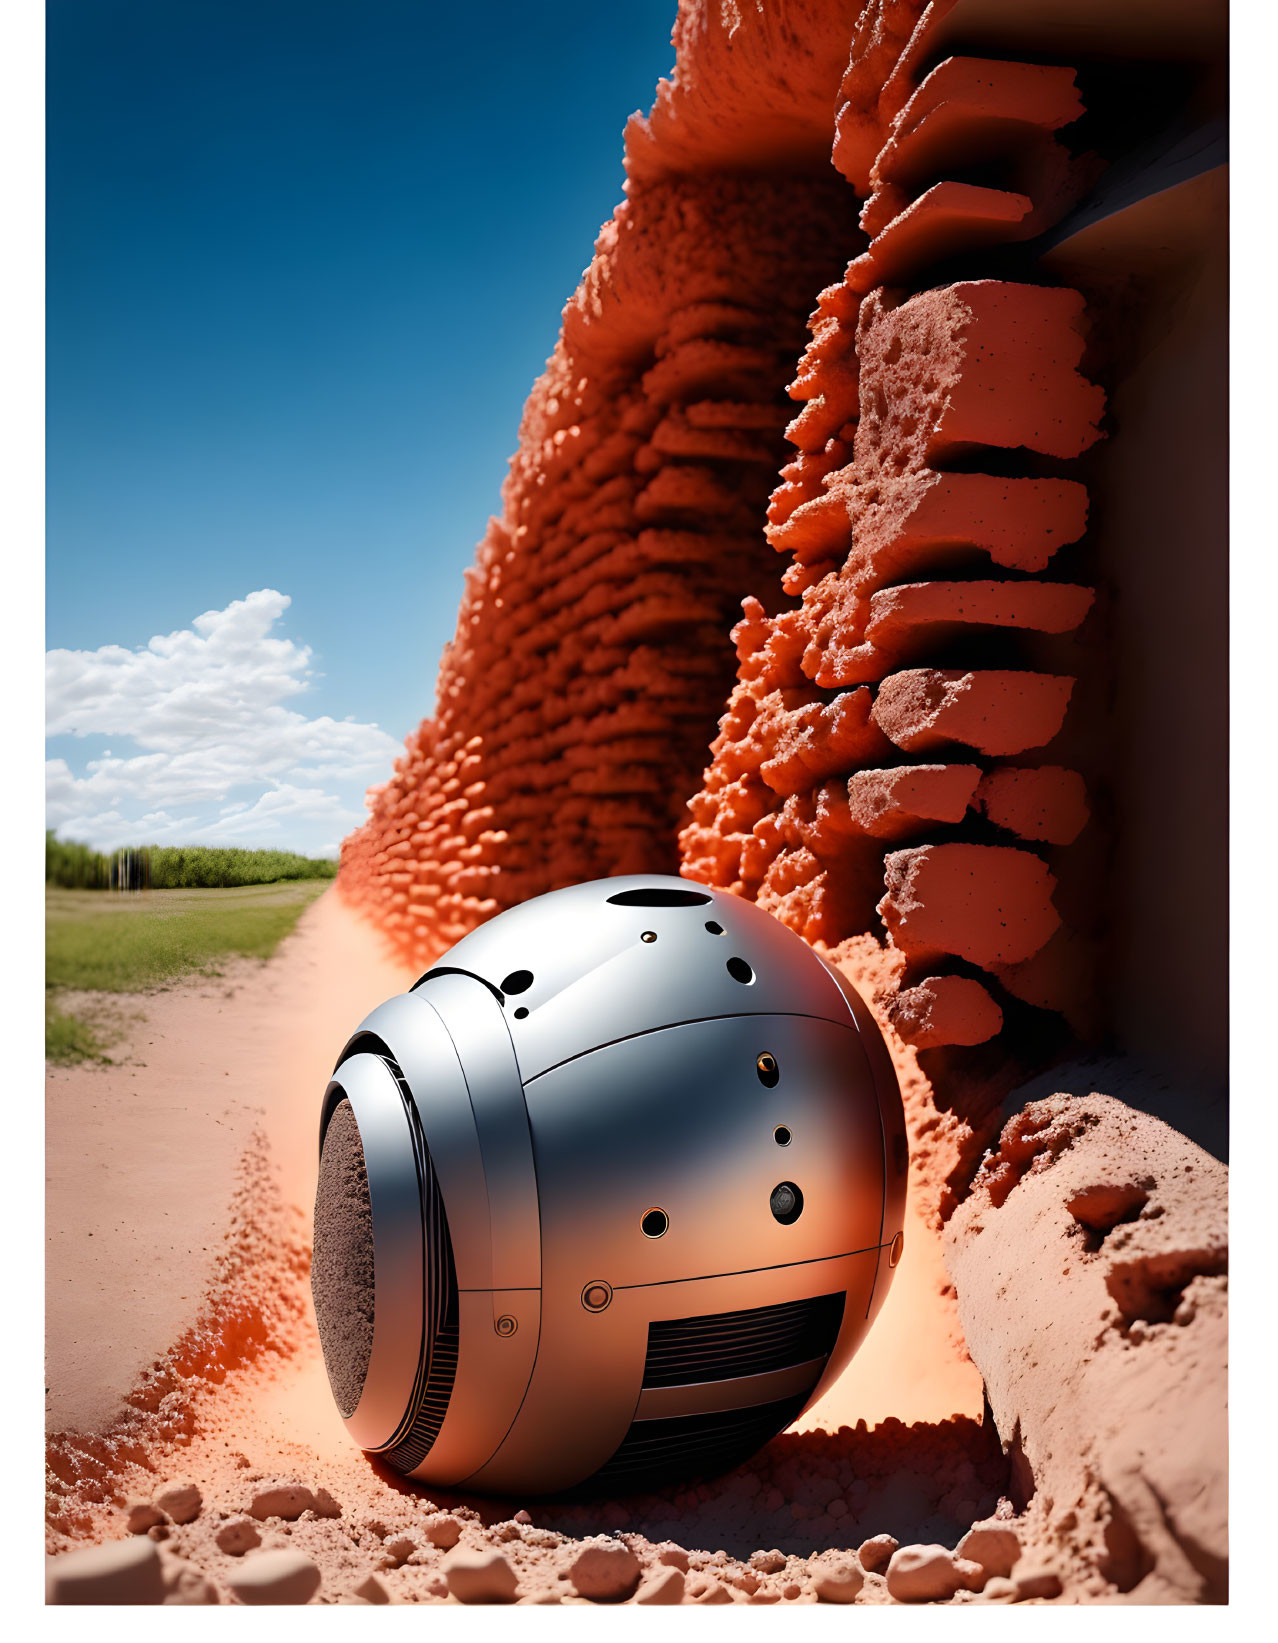 Futuristic spherical robot in desert canyon under blue sky